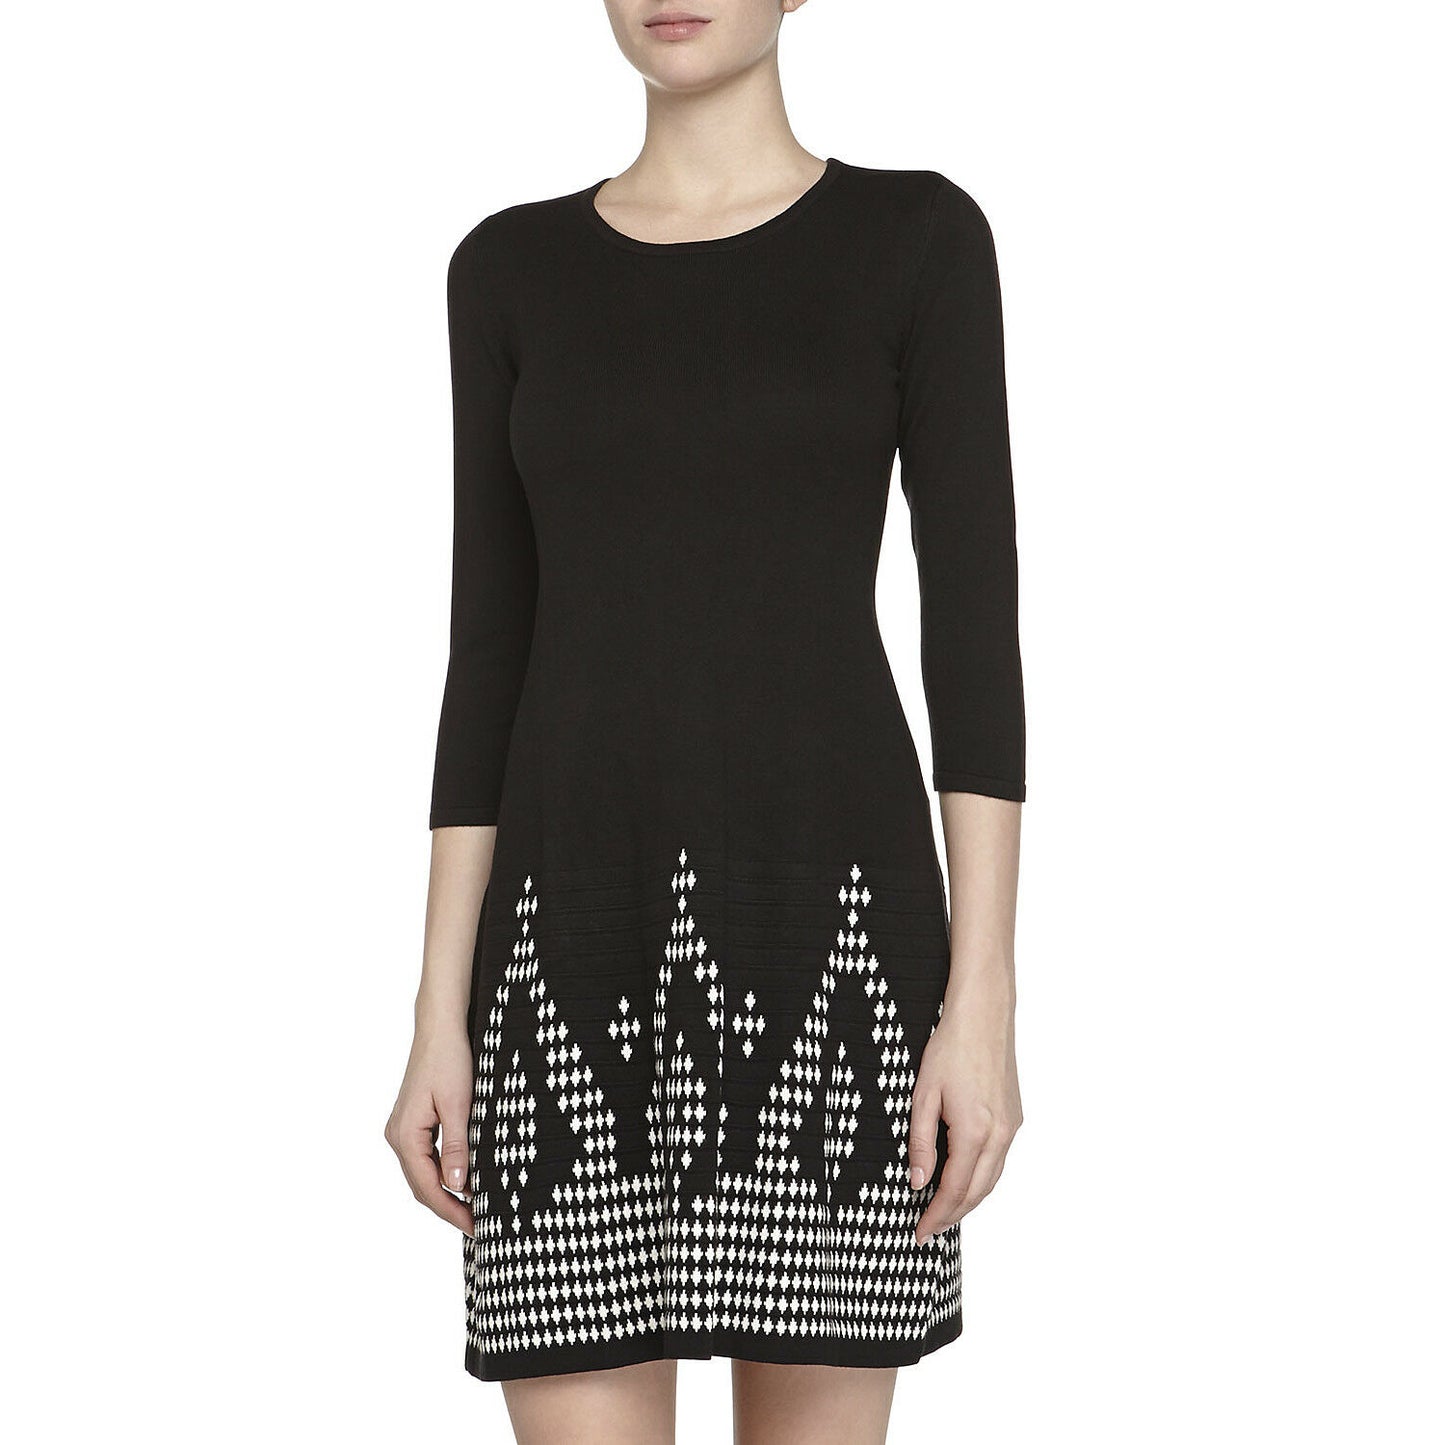 5Twelve Black White Geometric Sweater Knit 3/4 Sleeve Fit Flare Dress LG NWT